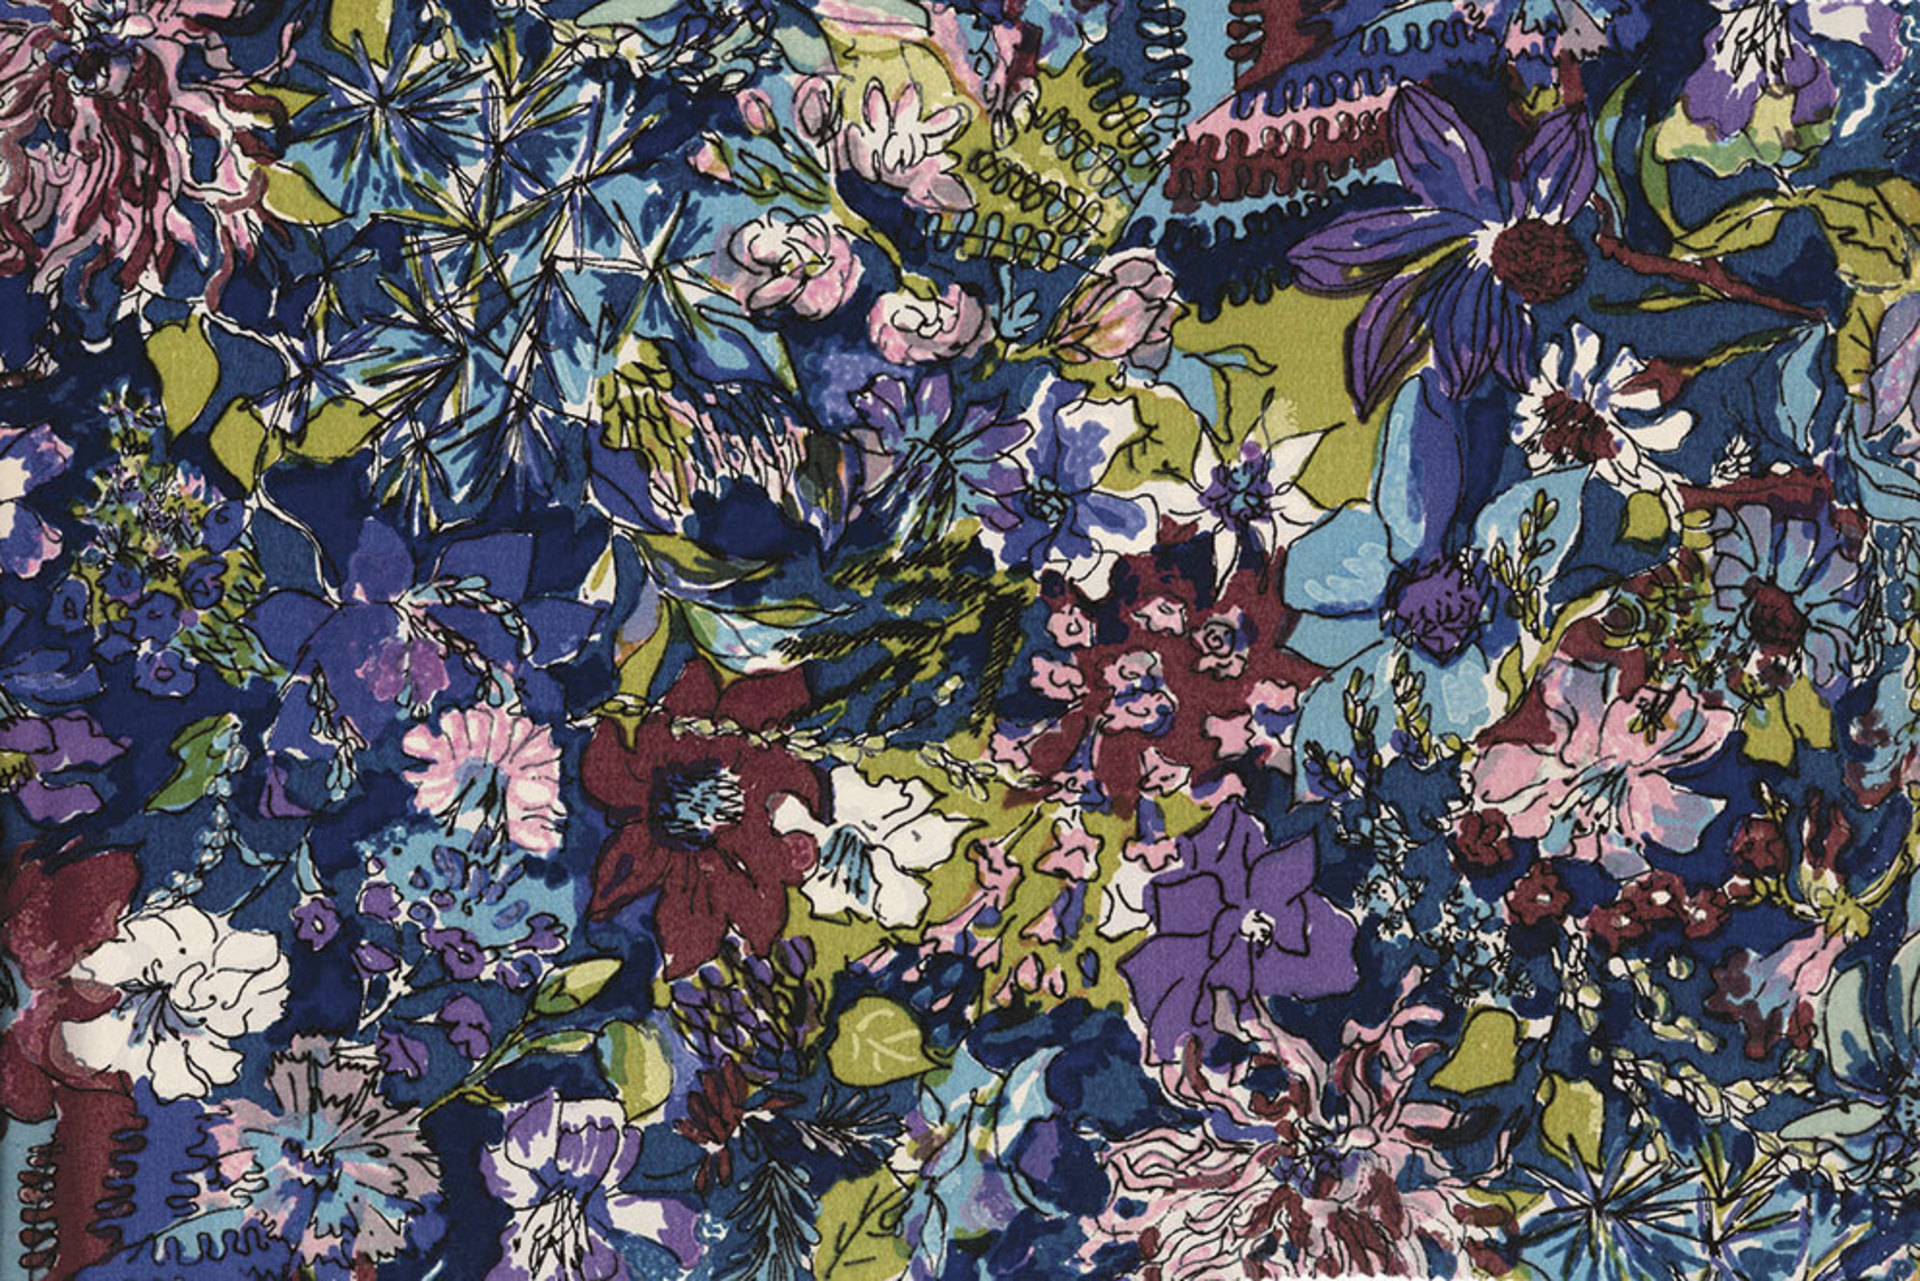 poristena-textilie-z-firmy-sochor-s-floralnimi-motivy-podle-navrhu-aloise-fisarka.jpg